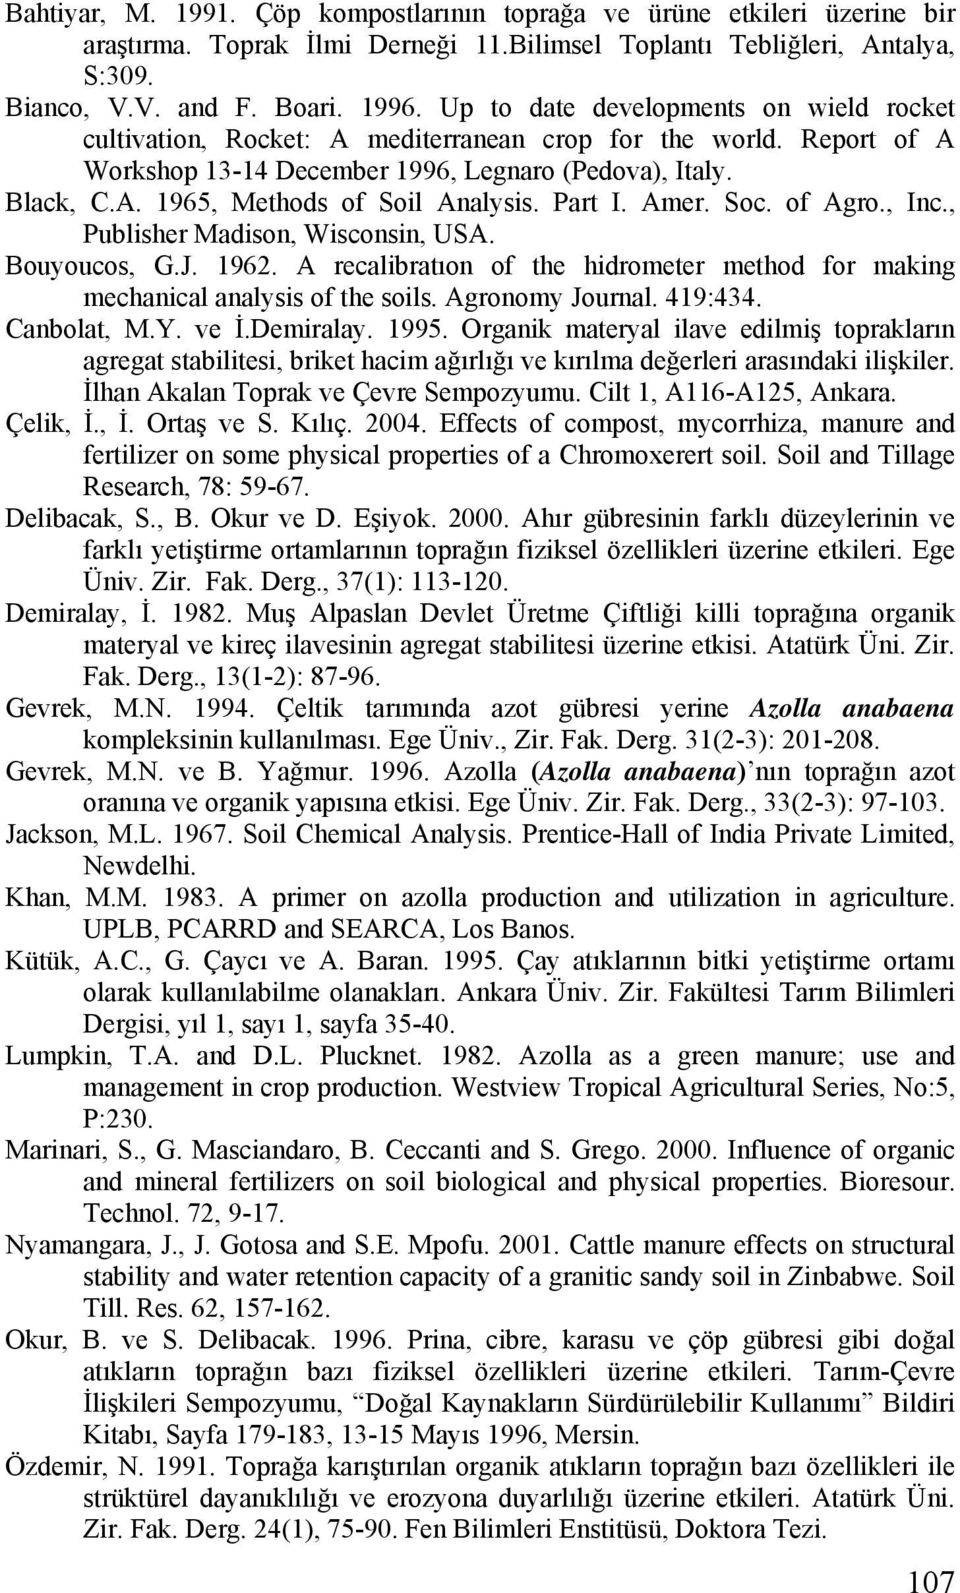 Amer. So. of Agro., In., Pulisher Mdison, Wisonsin, USA. Bouyouos, G.J. 1962. A relirtıon of the hidrometer method for mking mehnil nlysis of the soils. Agronomy Journl. 419:434. Cnolt, M.Y. ve İ.